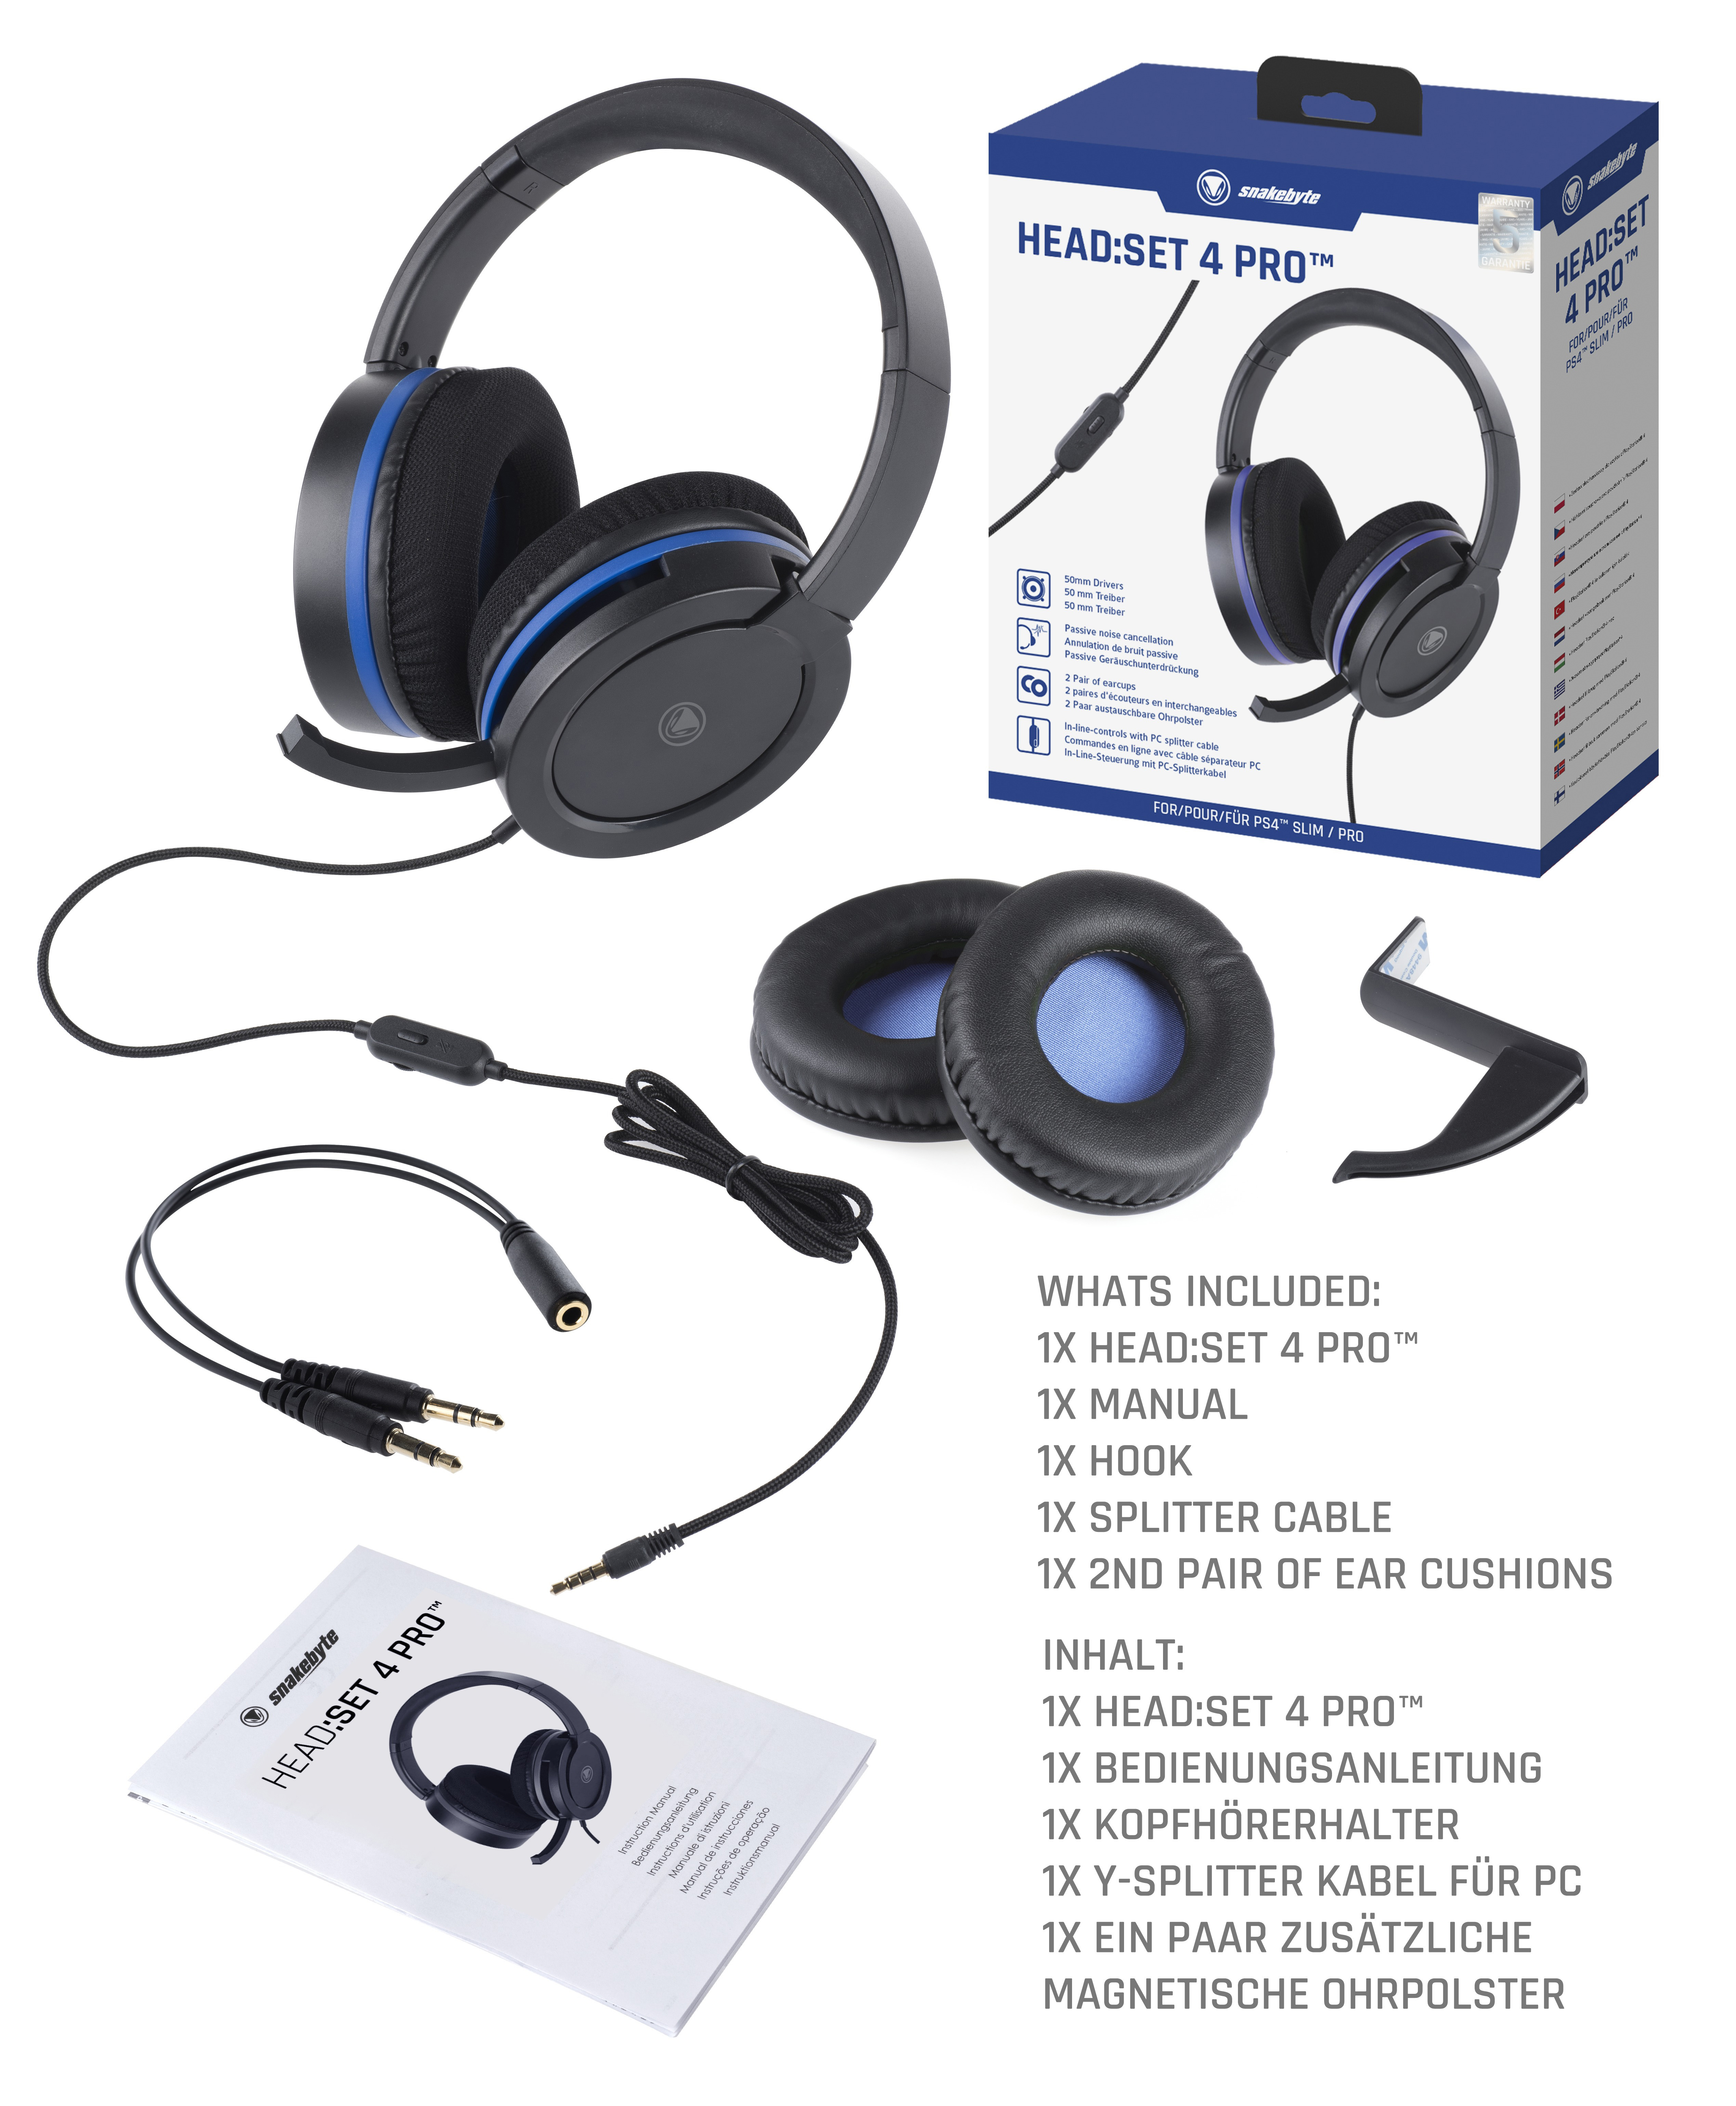 SNAKEBYTE PS4 Stereo HEAD SET mit Gaming Schwarz/Blau PRO™ Zubehör, On-ear Headset 4